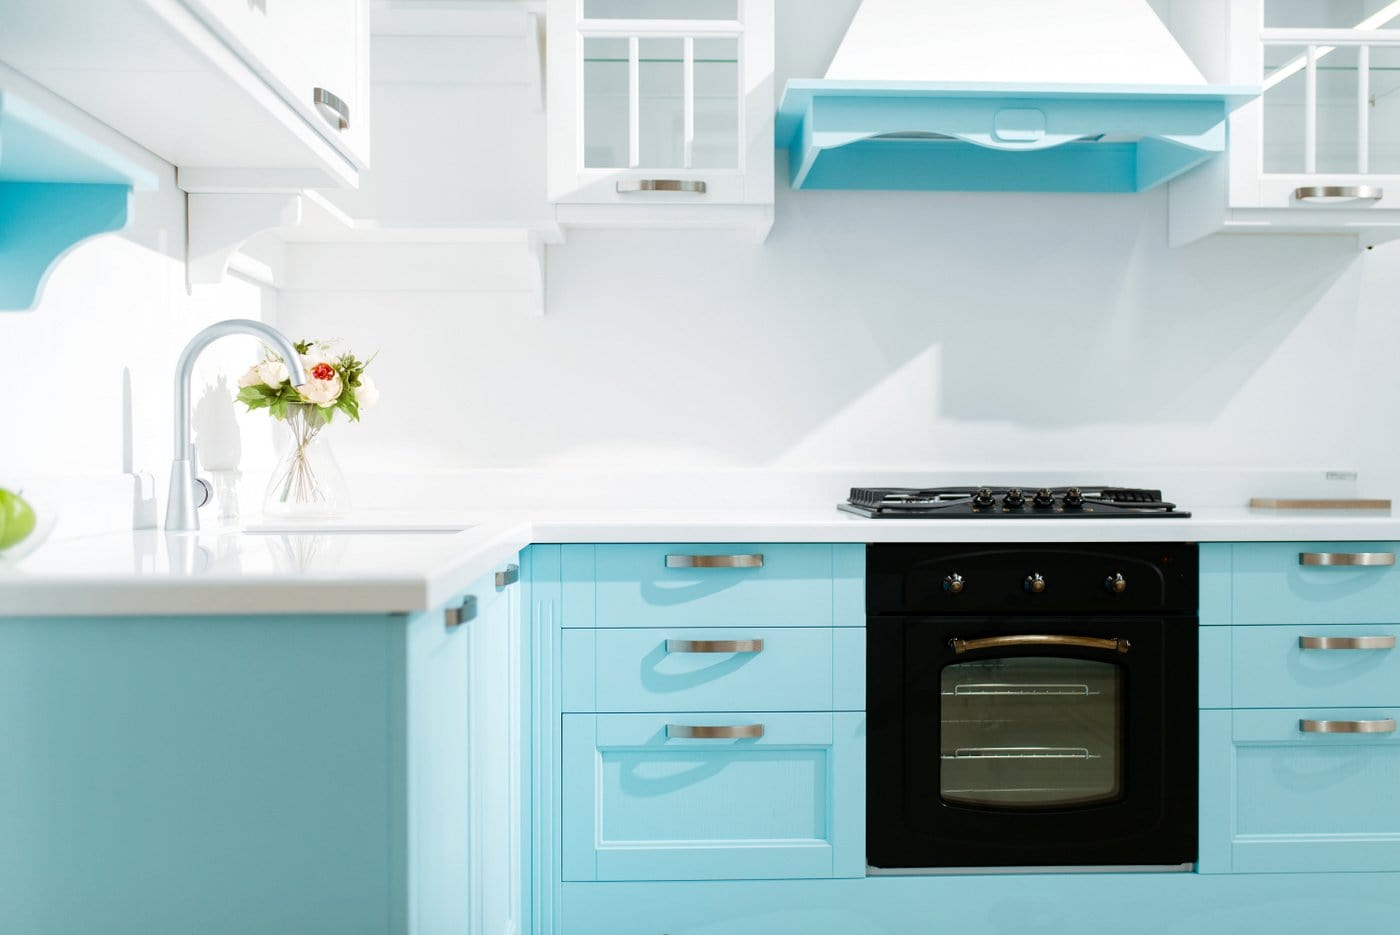 Light blue and white kitchen design